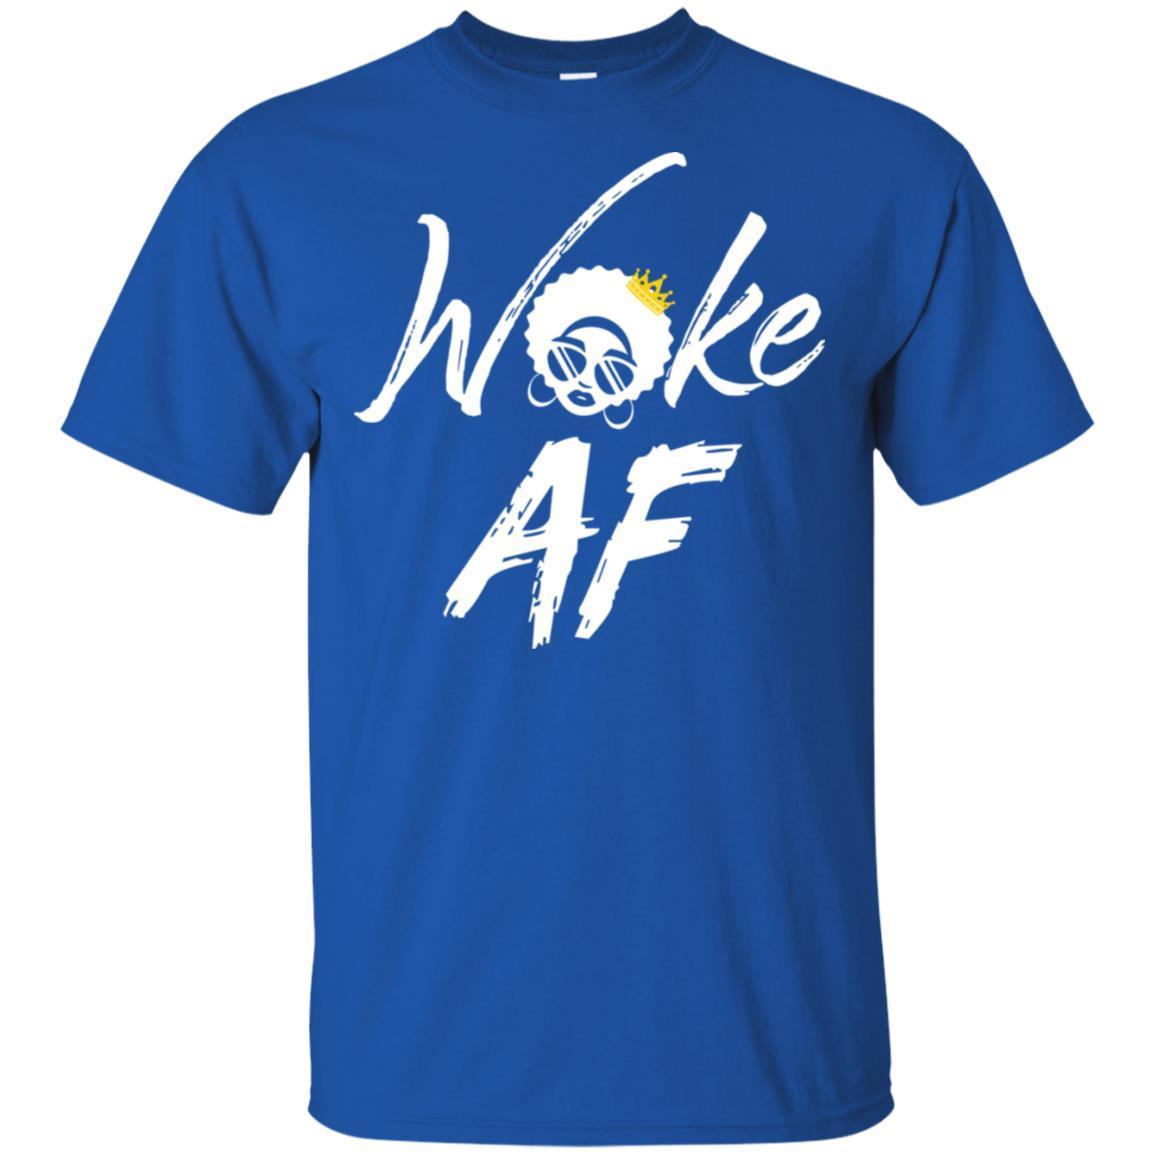 Wake Af T-Shirt Woke Clothing Afro Pro Black African American Pride ...